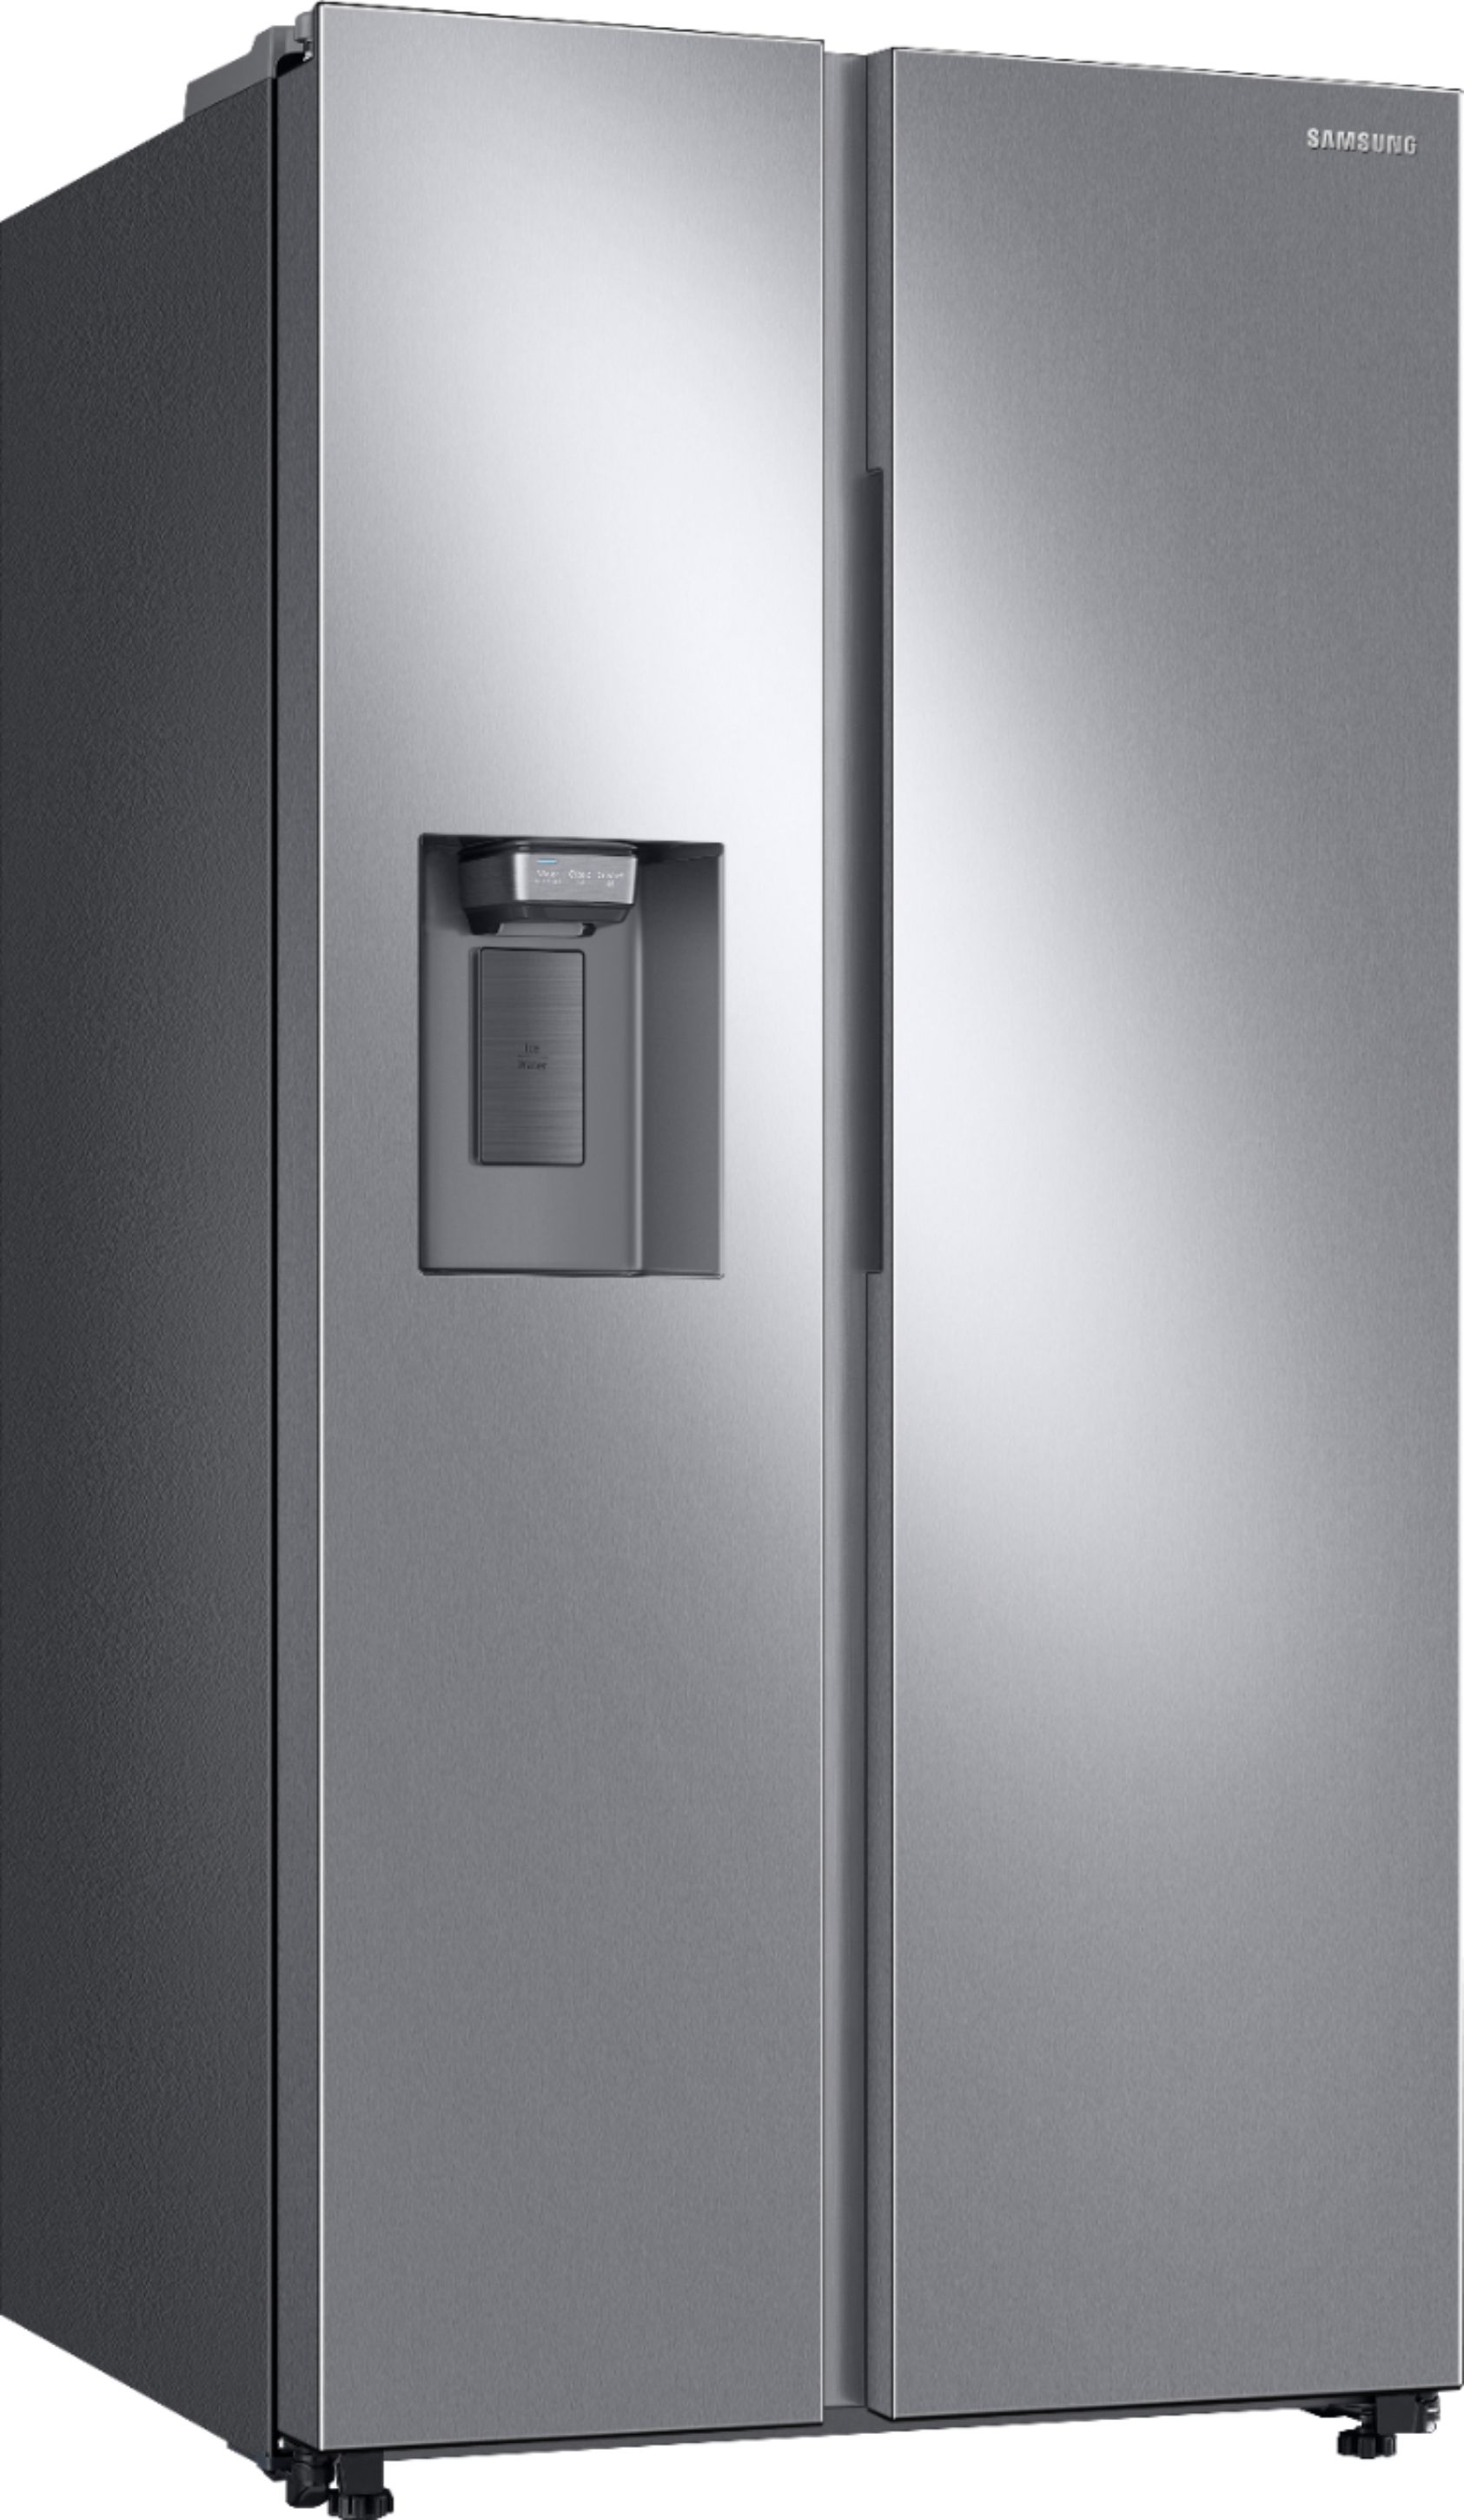 Angle View: Samsung - Bespoke 11.4 cu. ft. Flex Column refrigerator - Grey glass